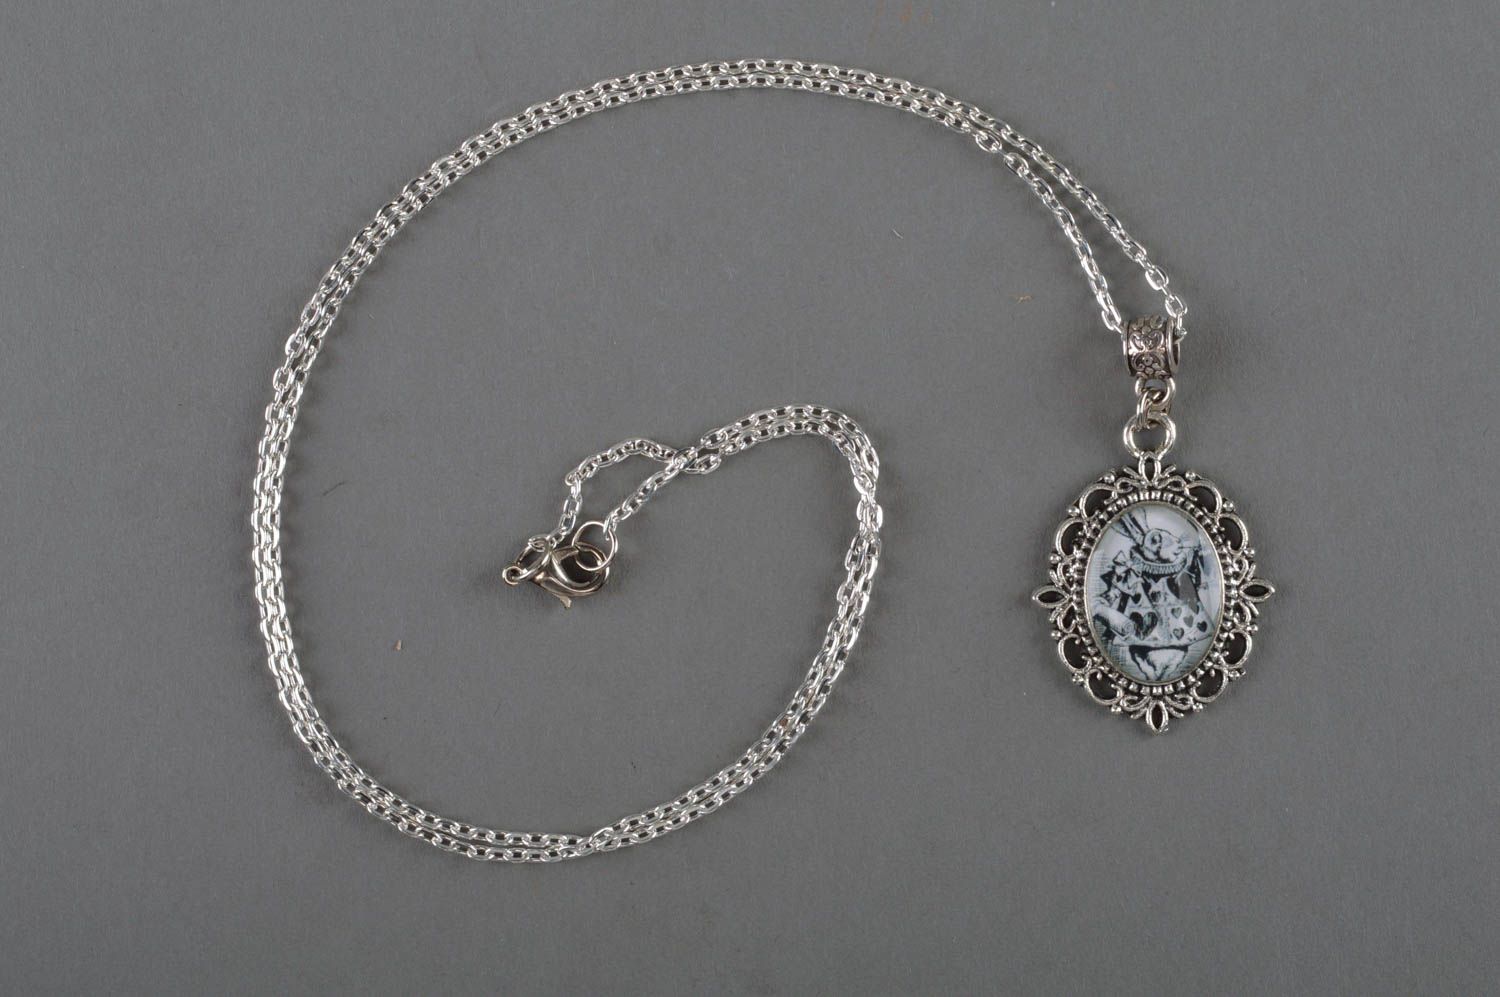 Unusual beautiful handmade round epoxy resin pendant in vintage style photo 1